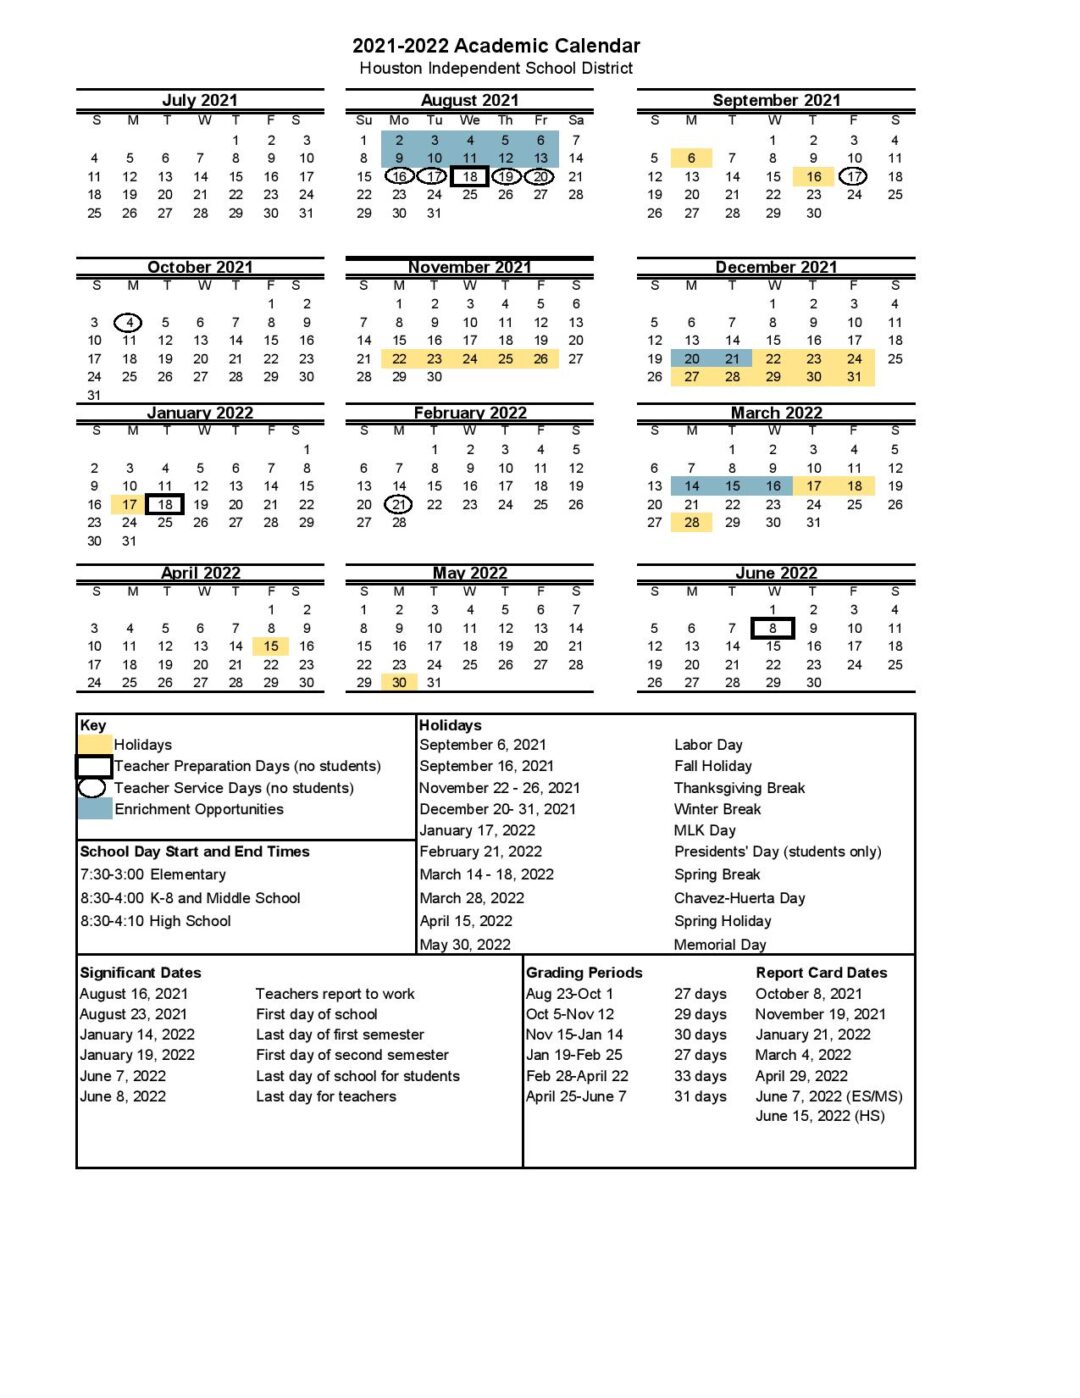 houston-independent-school-district-calendar-2021-2022